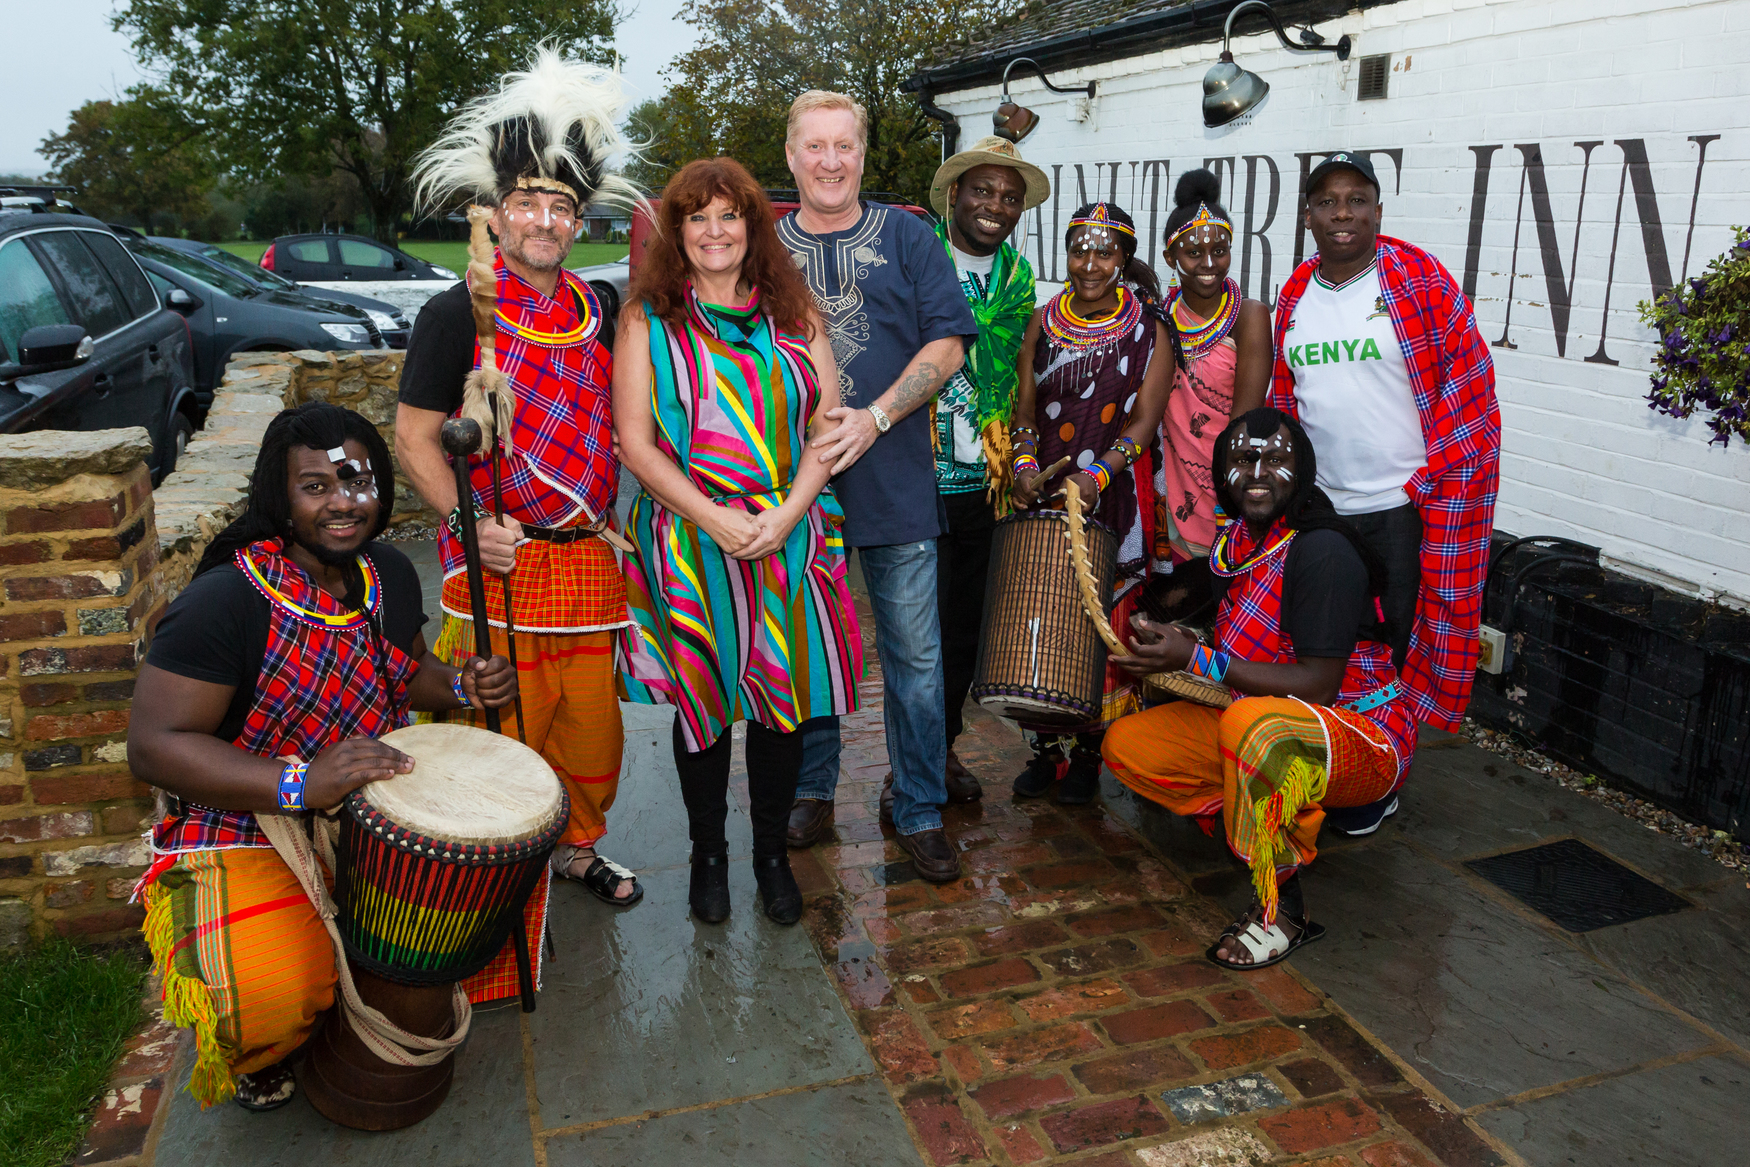 Licensee Karen Bartlett and partner Steve, centre, with some of the visiting Kenyans at the Walnut Tree in Aldington